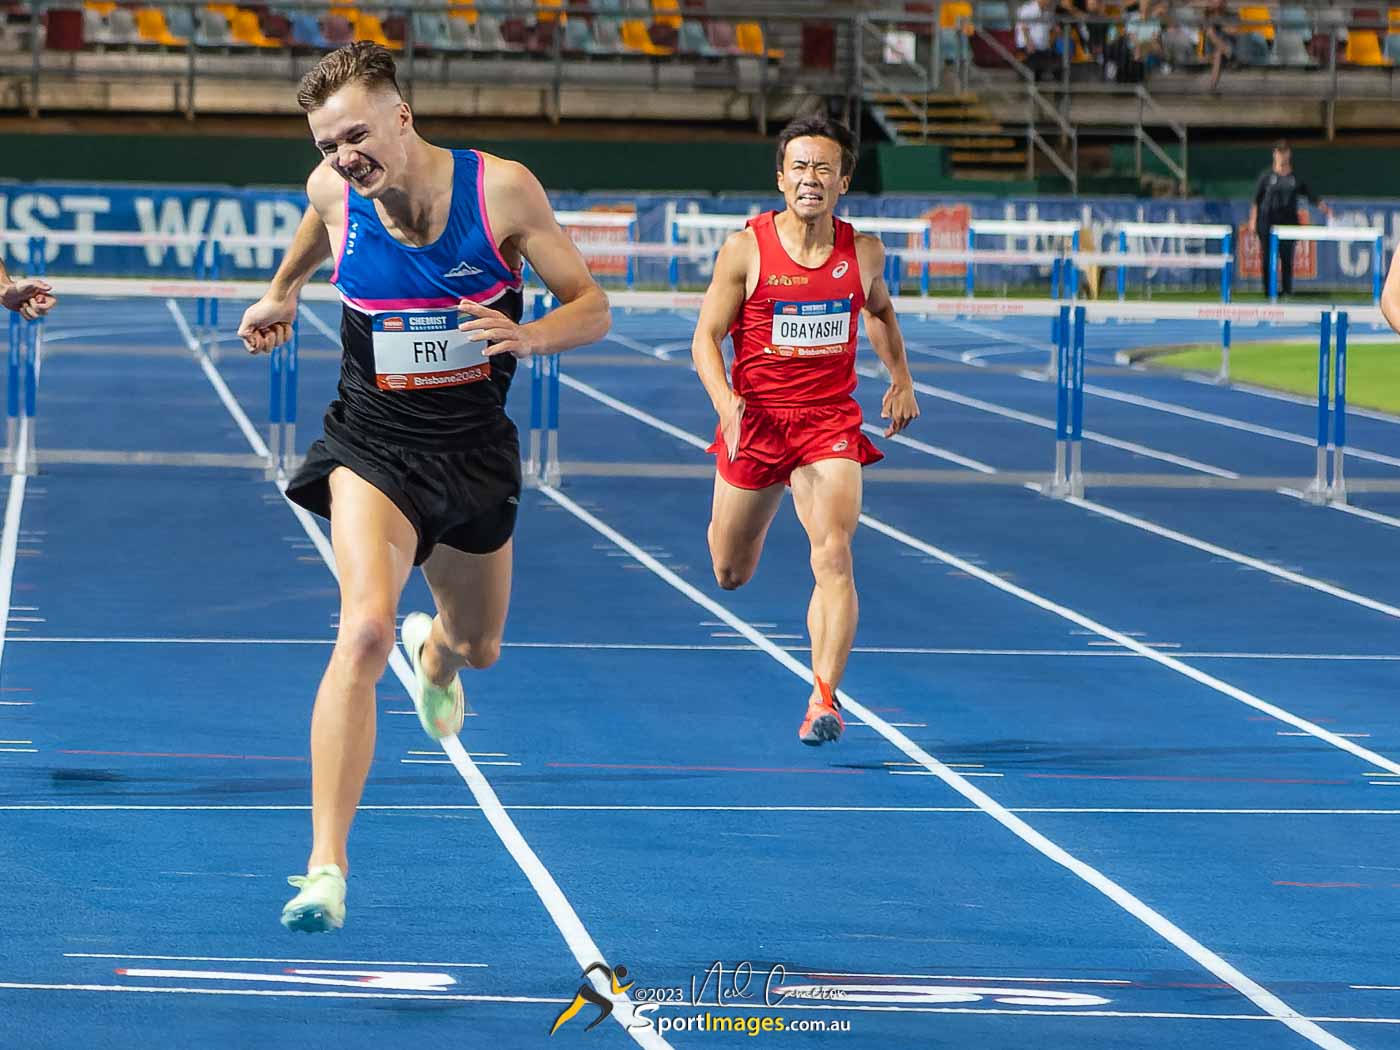 Conor Fry, Masayuki Obayashi, Men's 400m Hurdles